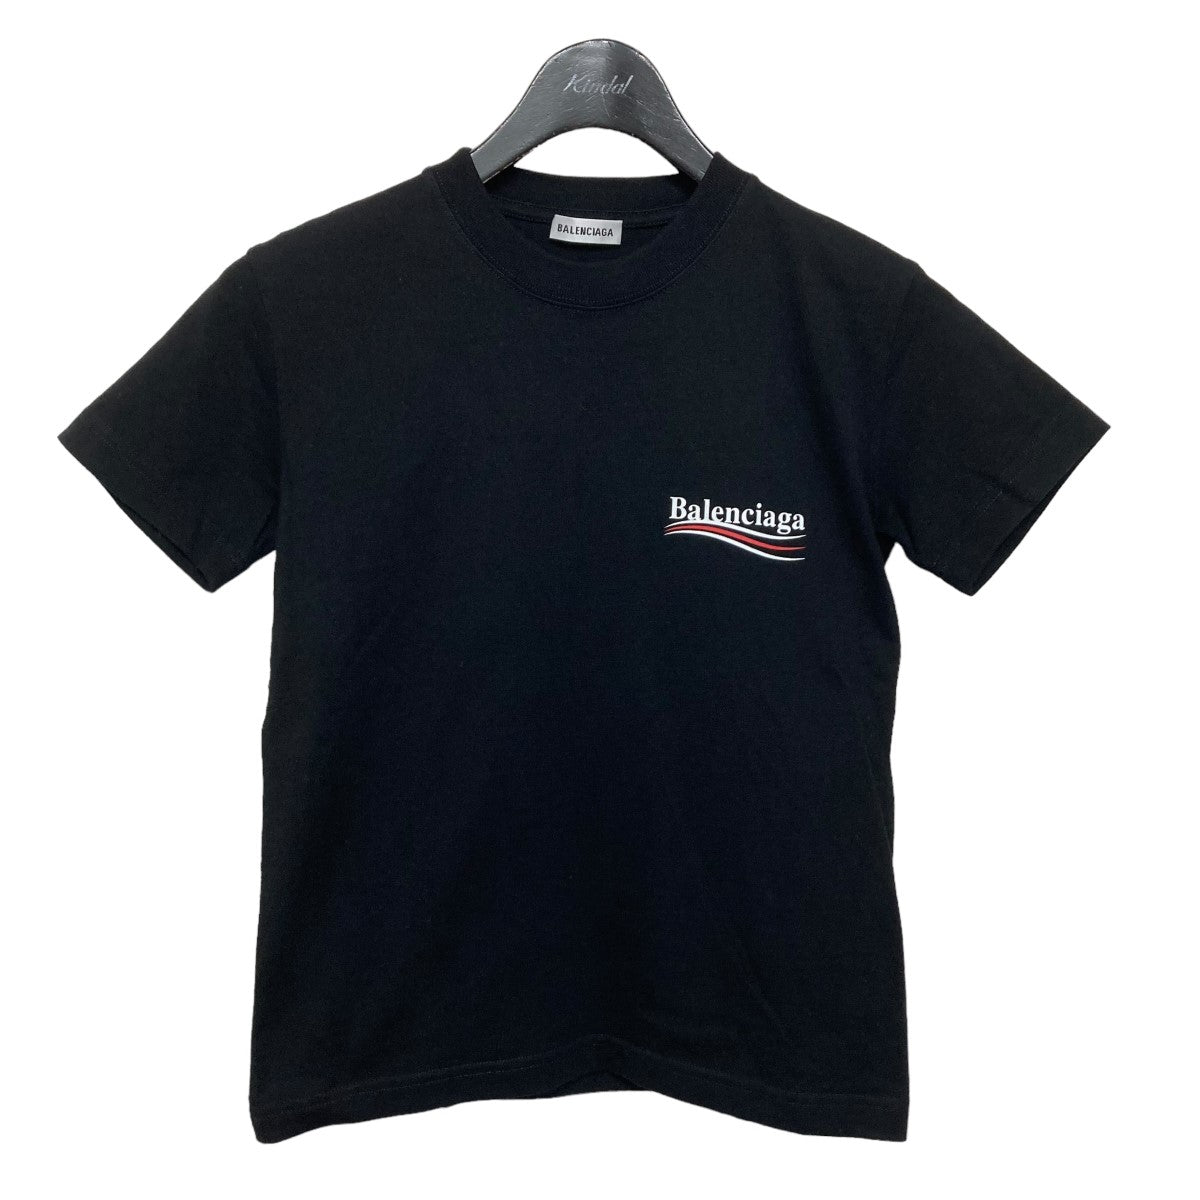 BALENCIAGA(バレンシアガ) ロゴTシャツ 612964 ブラック サイズ 14 